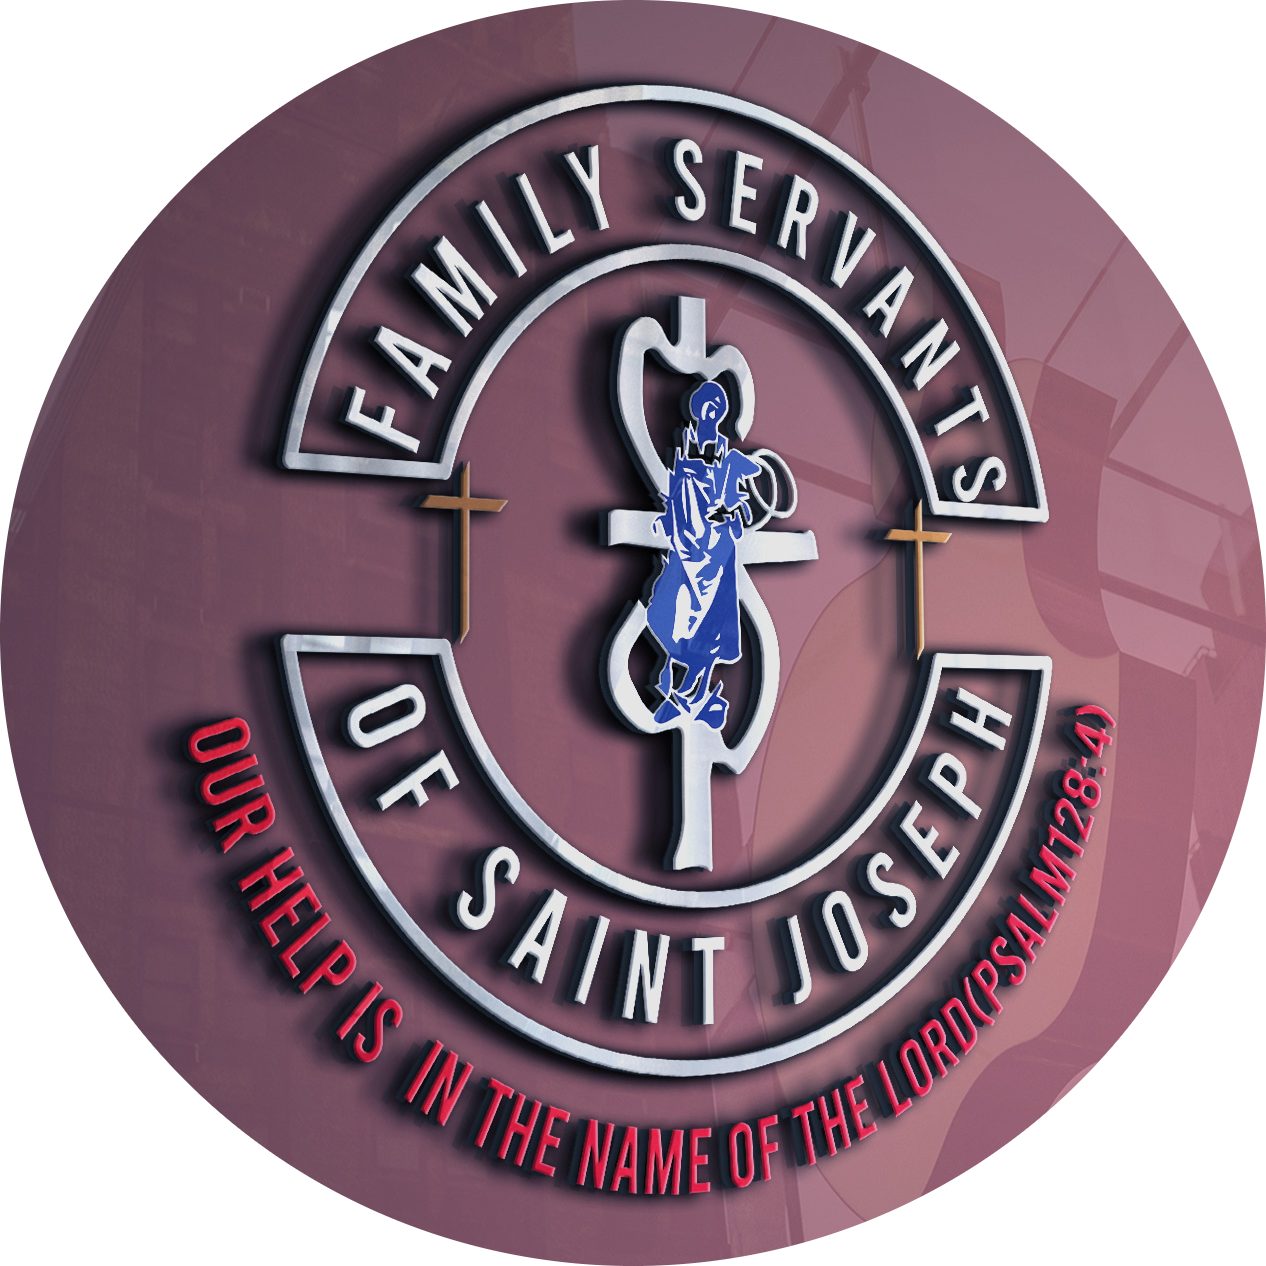 Launching Our New Website Family Servants Of St Joseph